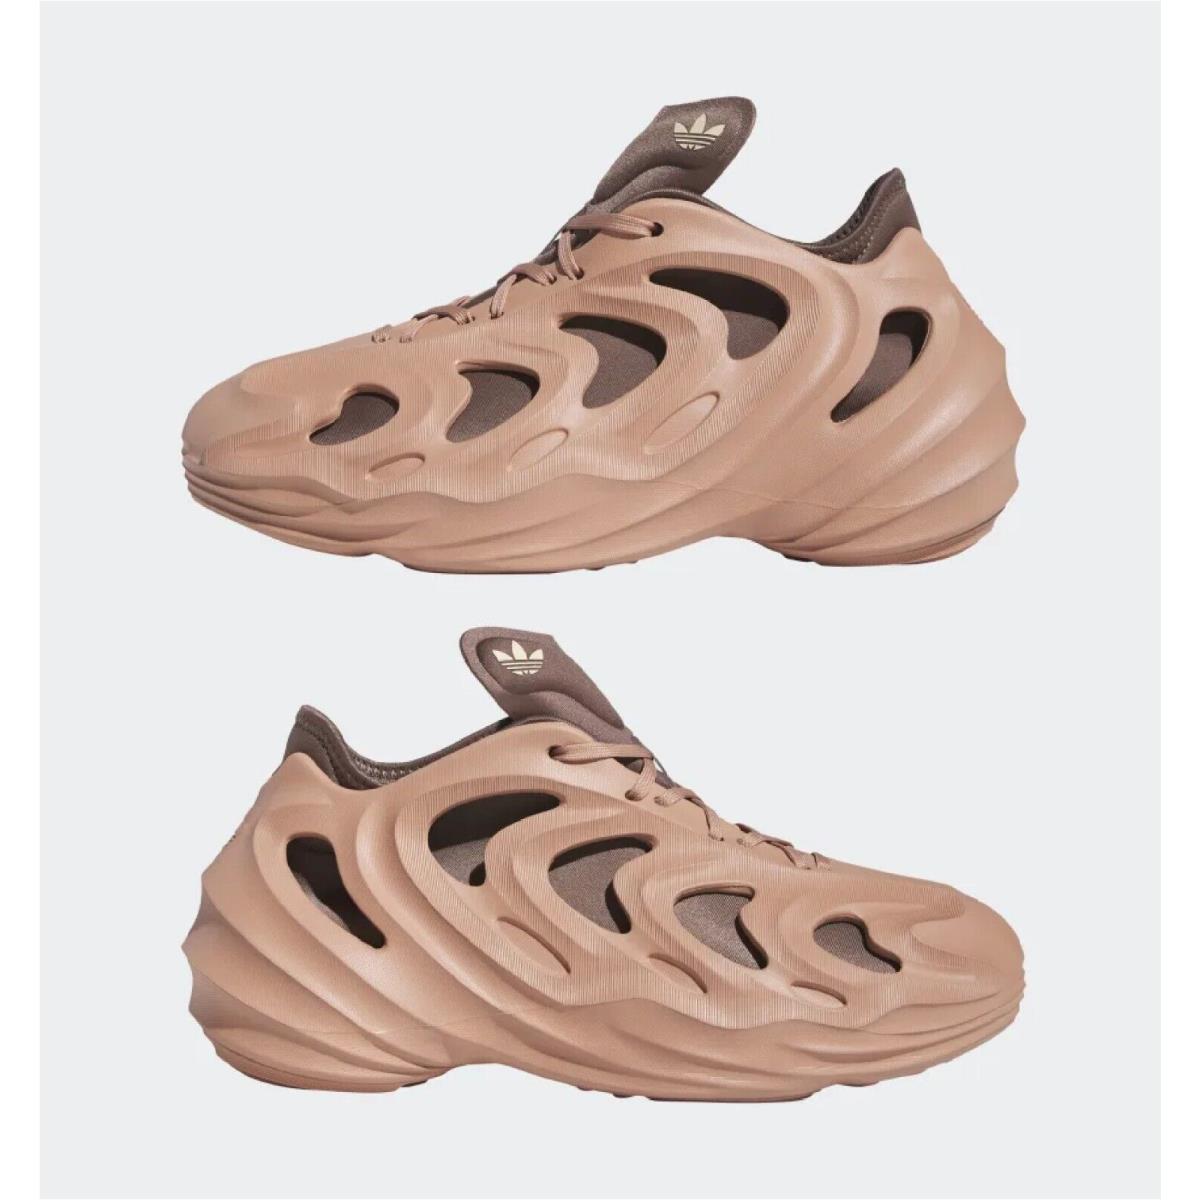 IE4701 Adidas Adifom Q Men`s Sneaker Shoes Tan/brown - Tan/Brown